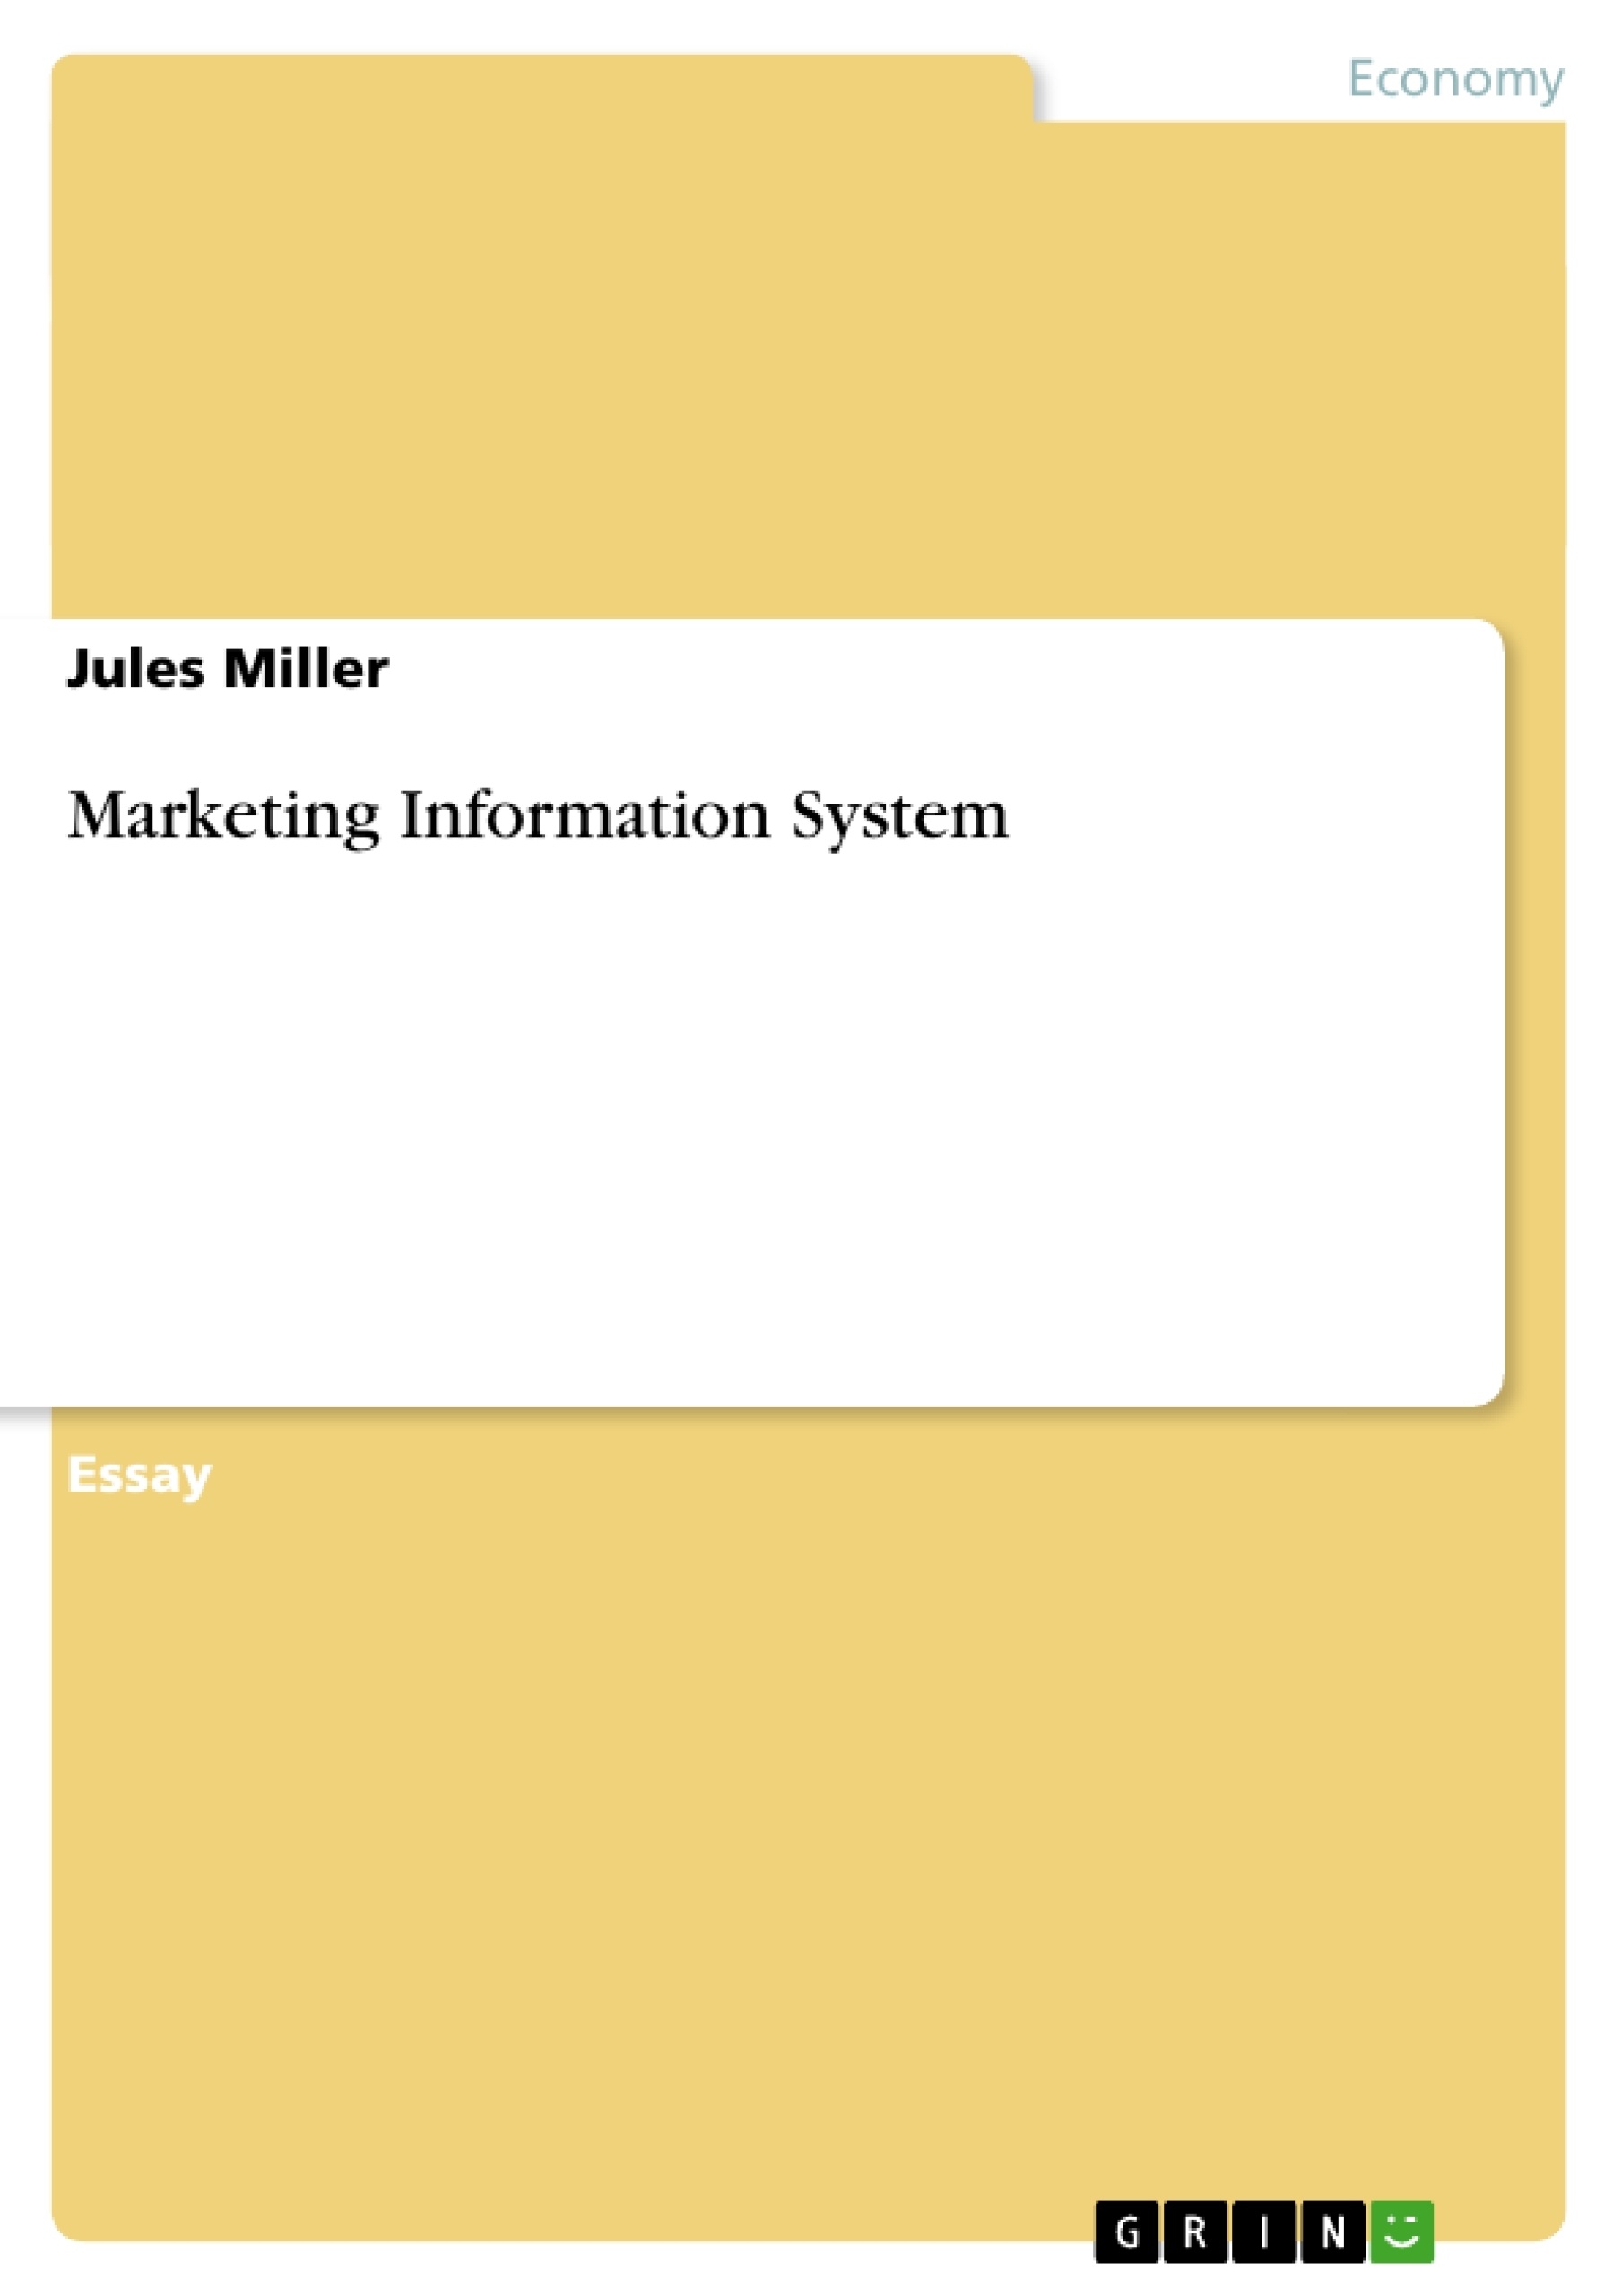 Title: Marketing Information System